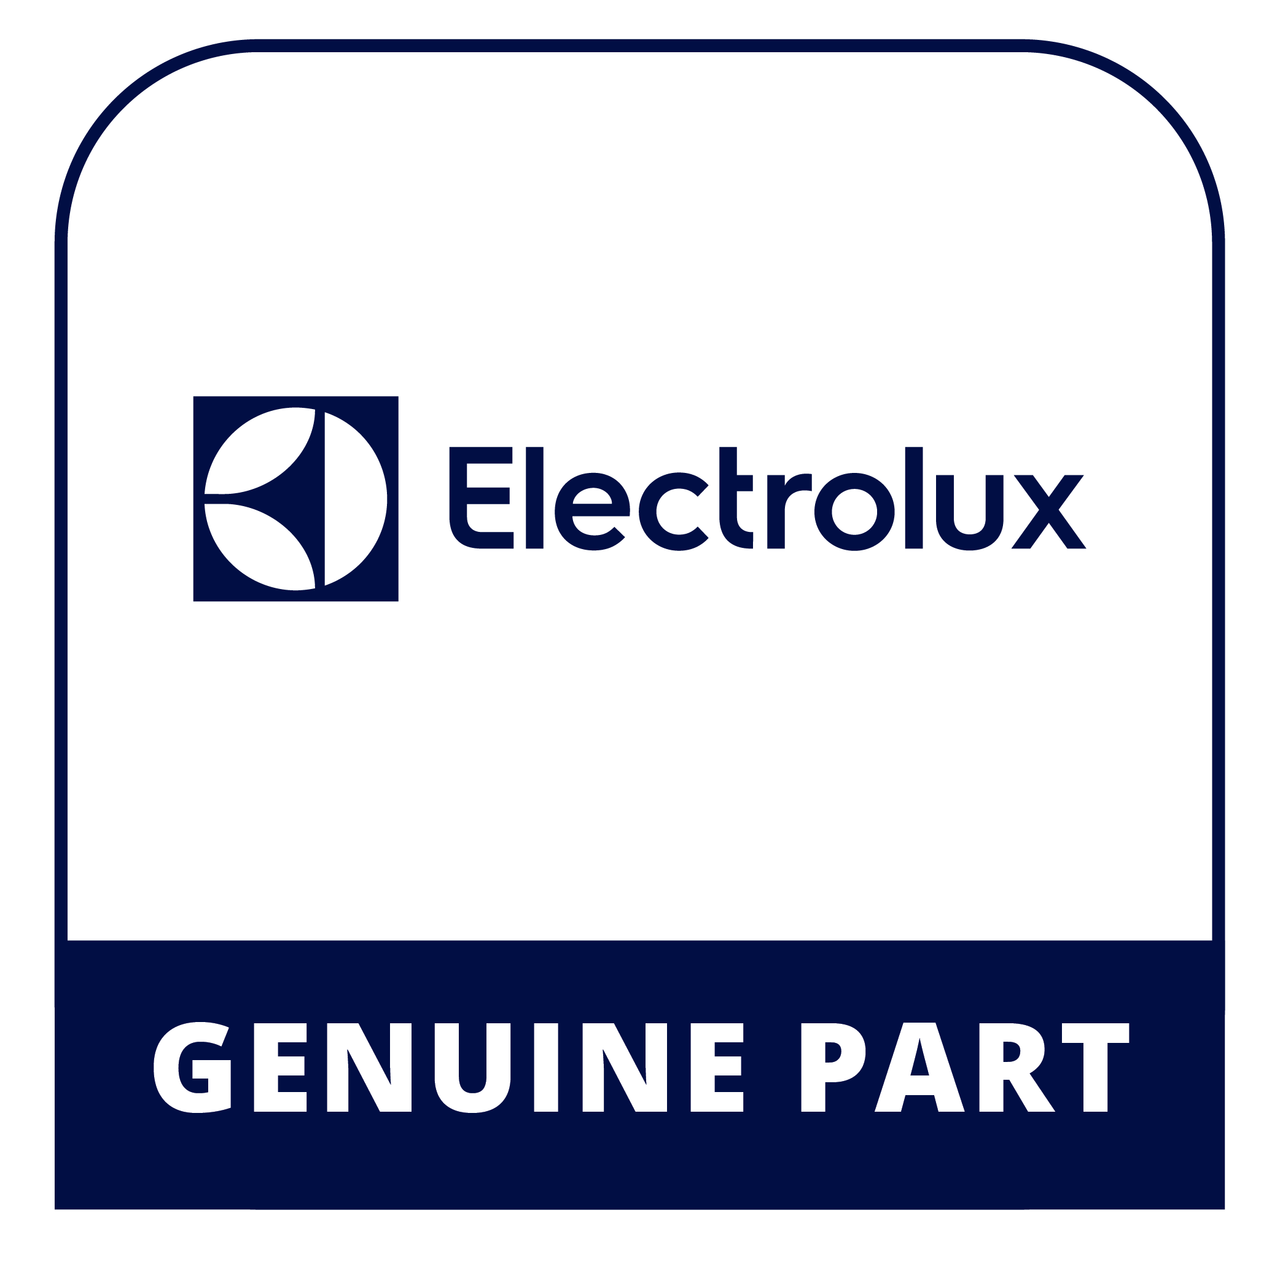 Frigidaire - Electrolux 316201858 Panel - Genuine Electrolux Part